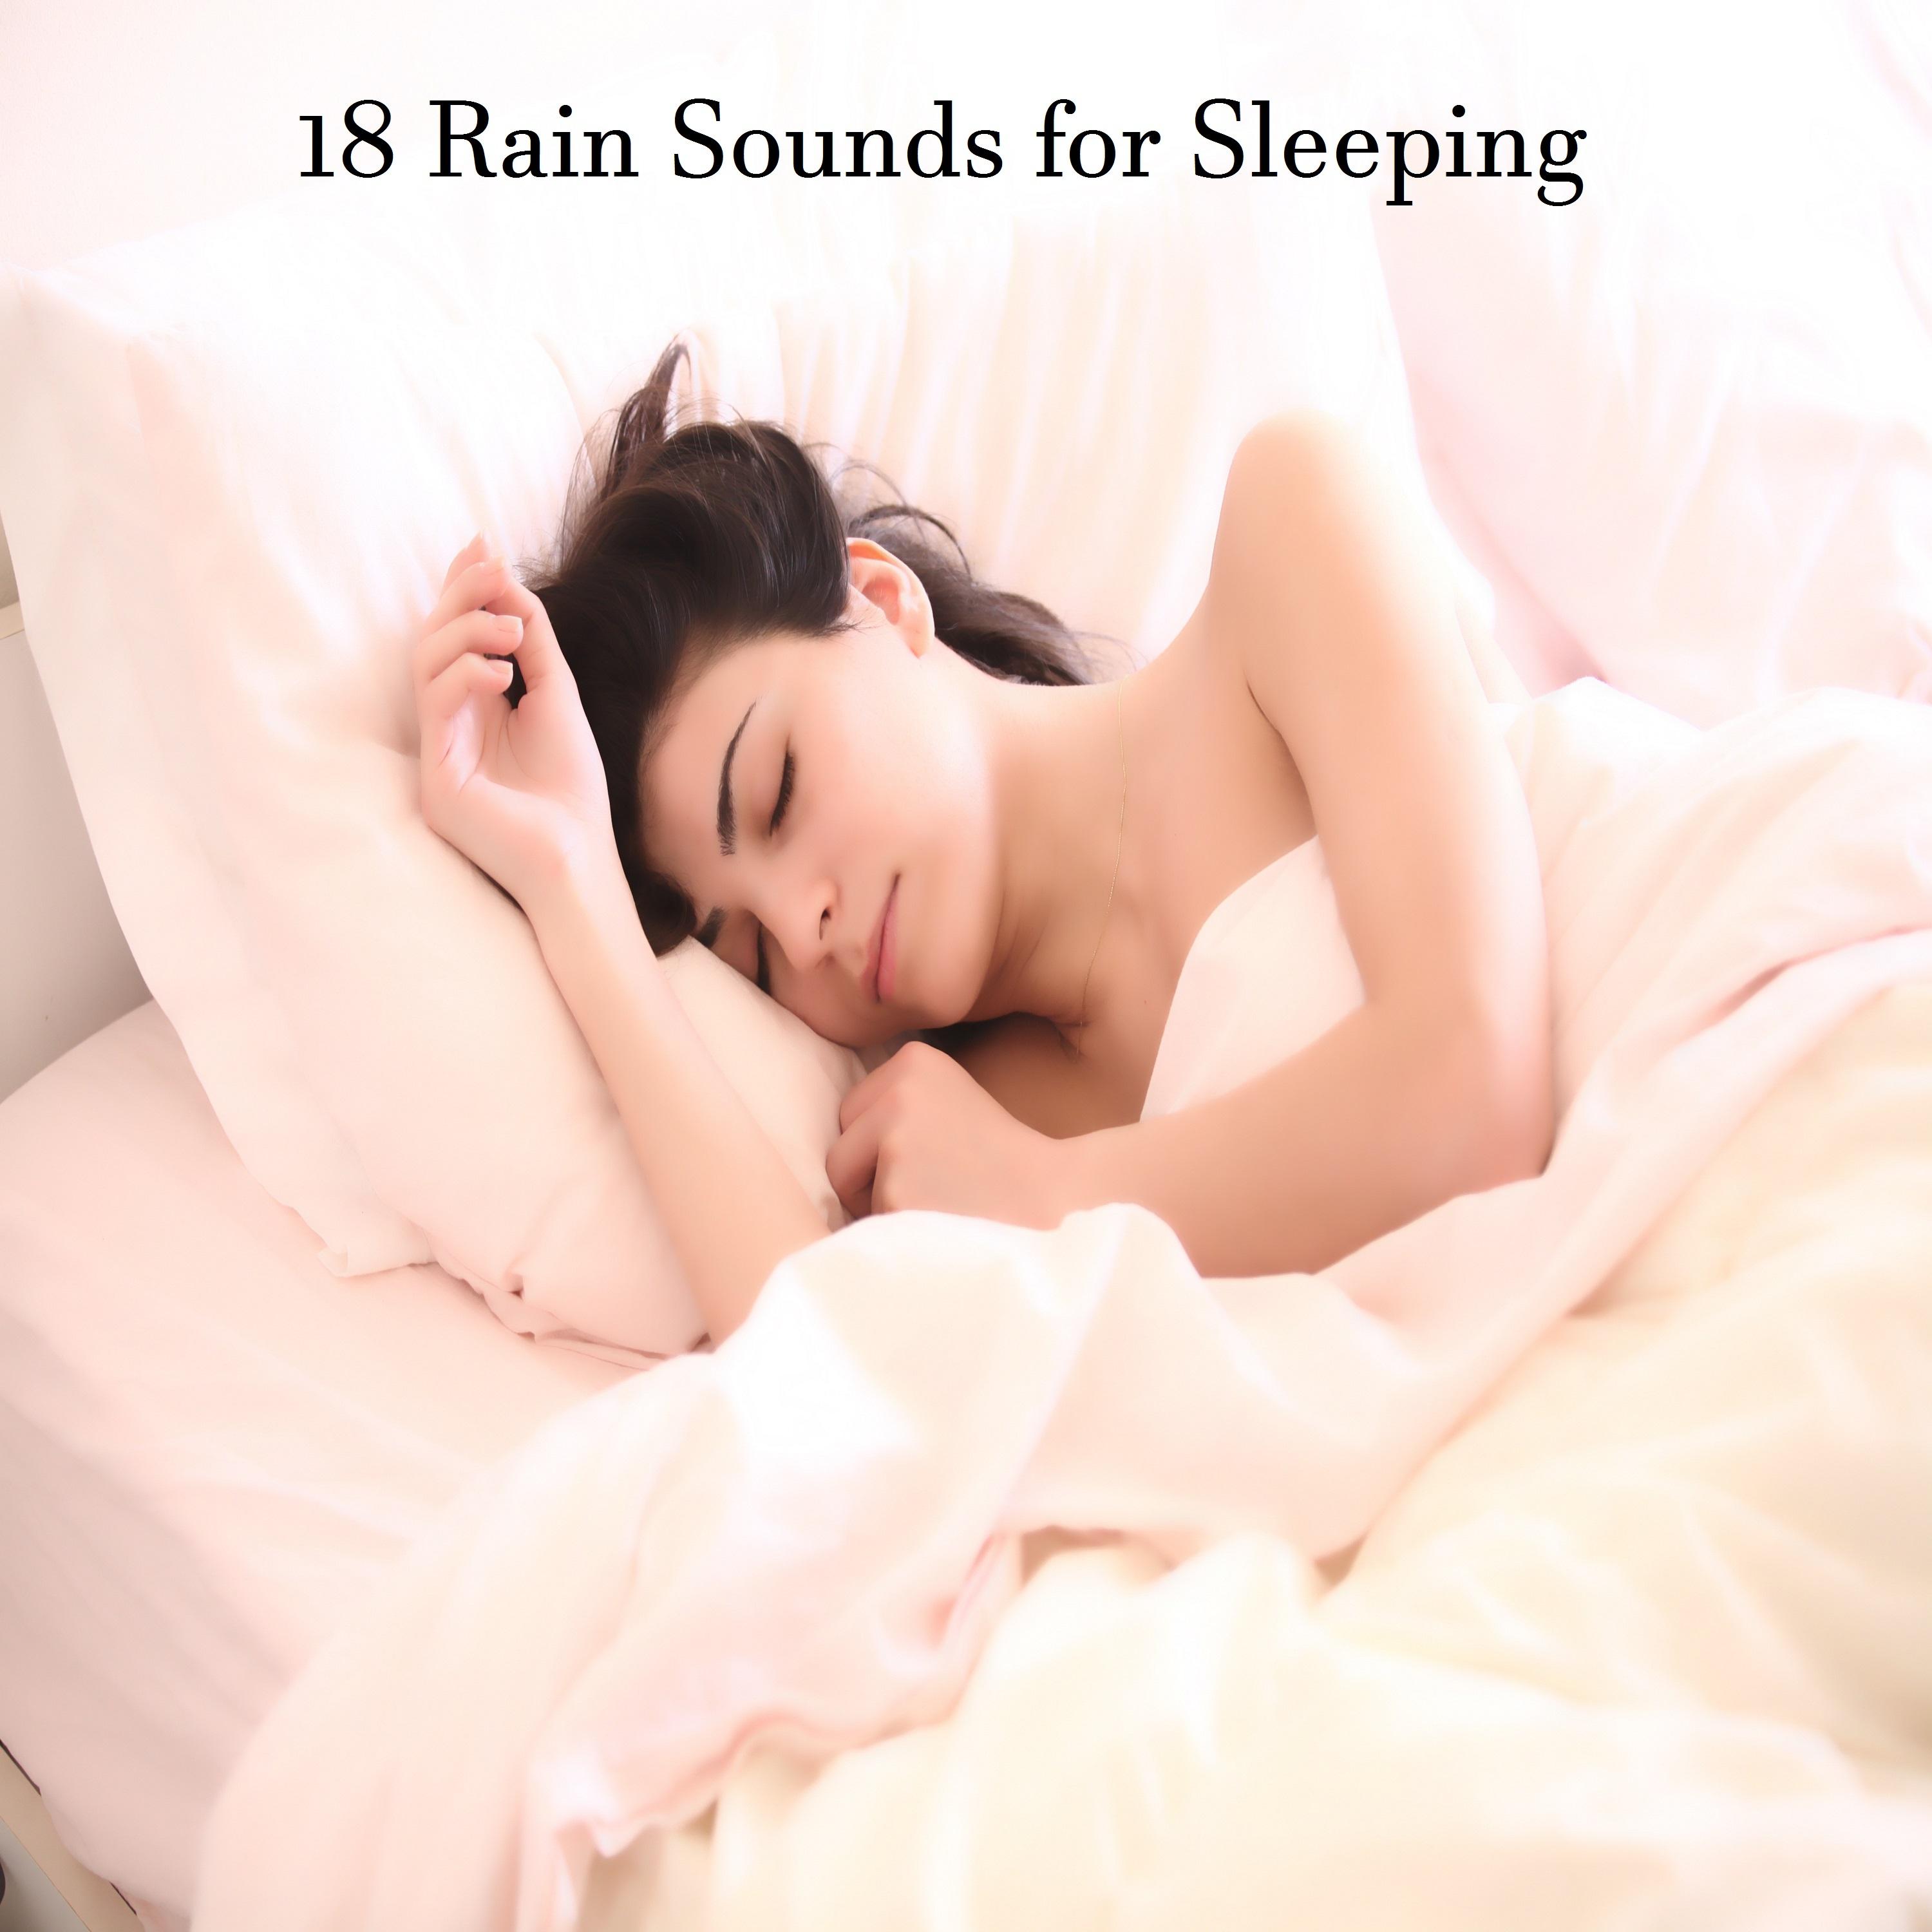 18 Rain Sounds for Sleeping